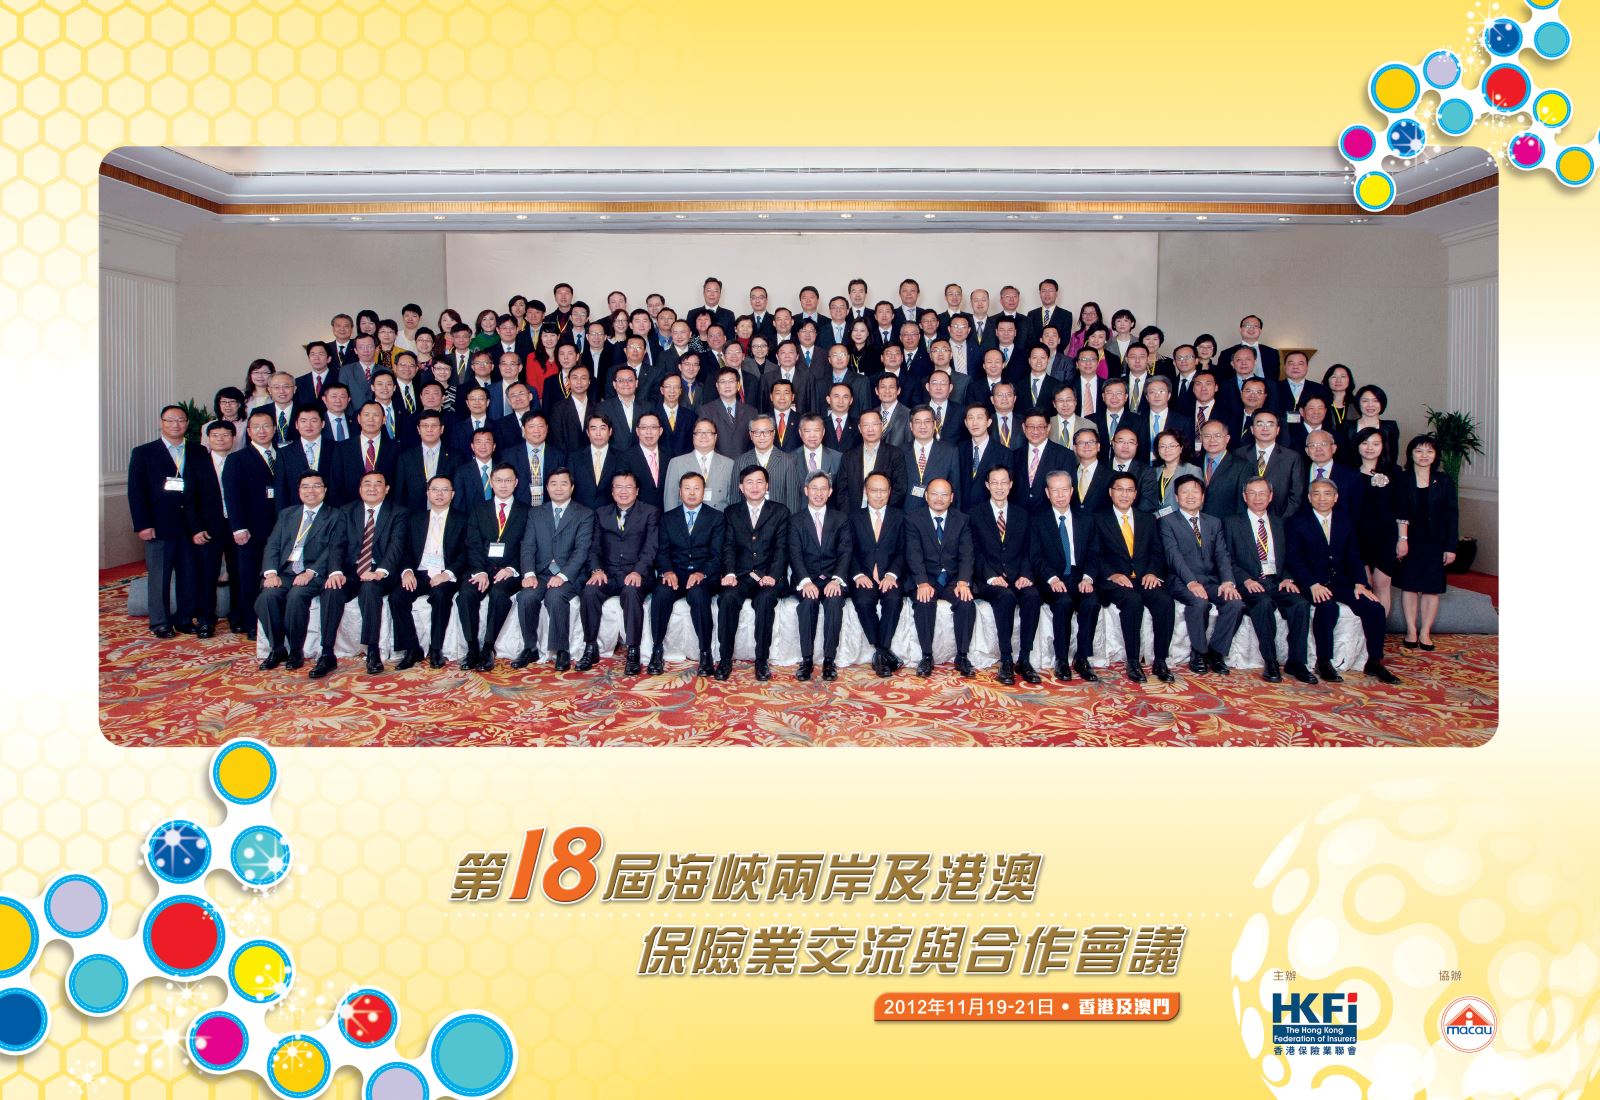 18th Cross-strait, Hong Kong & Macau Insurance Business Conference - Group Photos